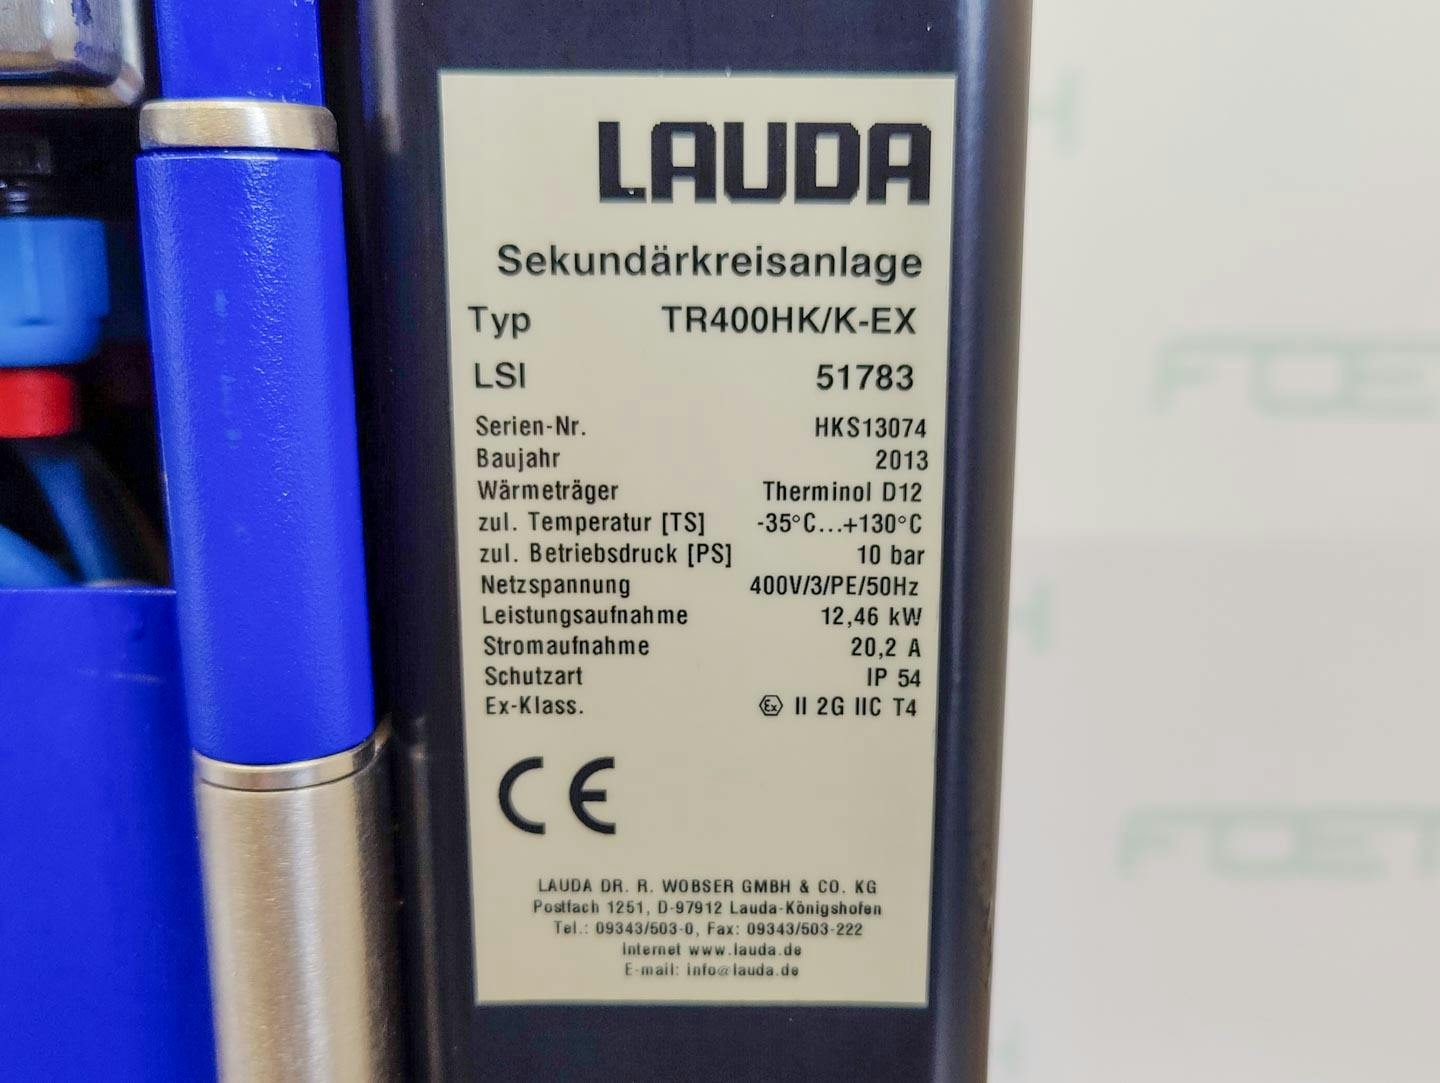 Lauda TR400 HK/KT-EX "secondary circuit system" - Thermorégulateur - image 16